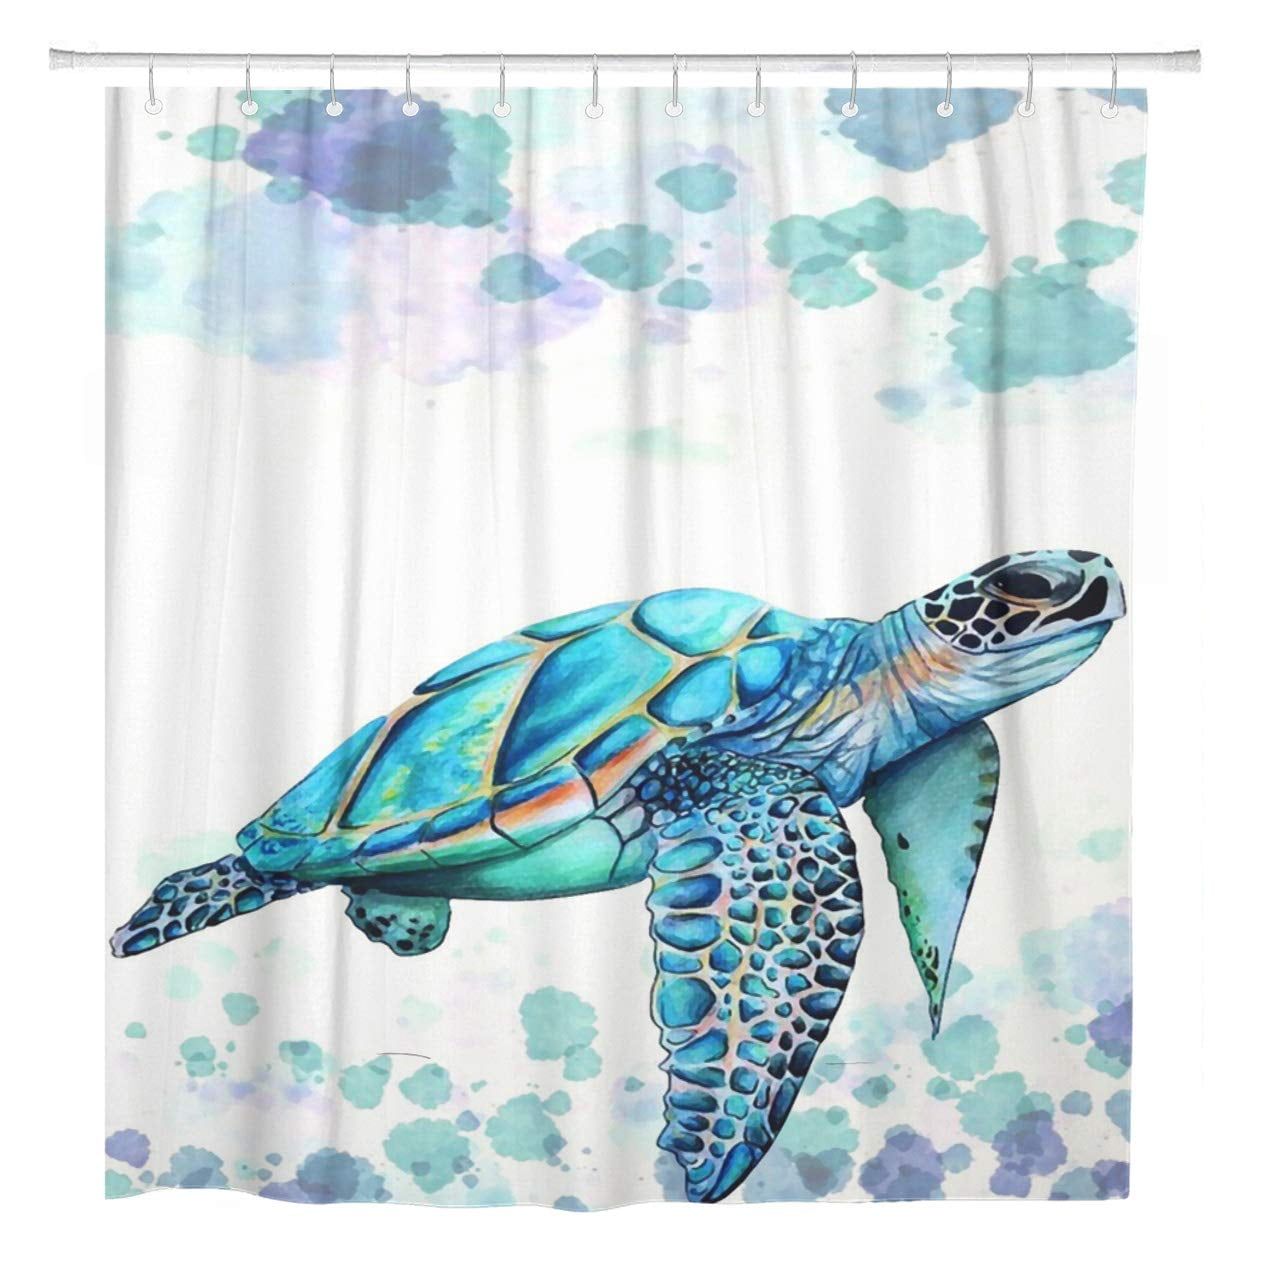 Marine animal sea turtle Shower Curtain Bathroom Decor Fabric & 12hooks 71x71in 